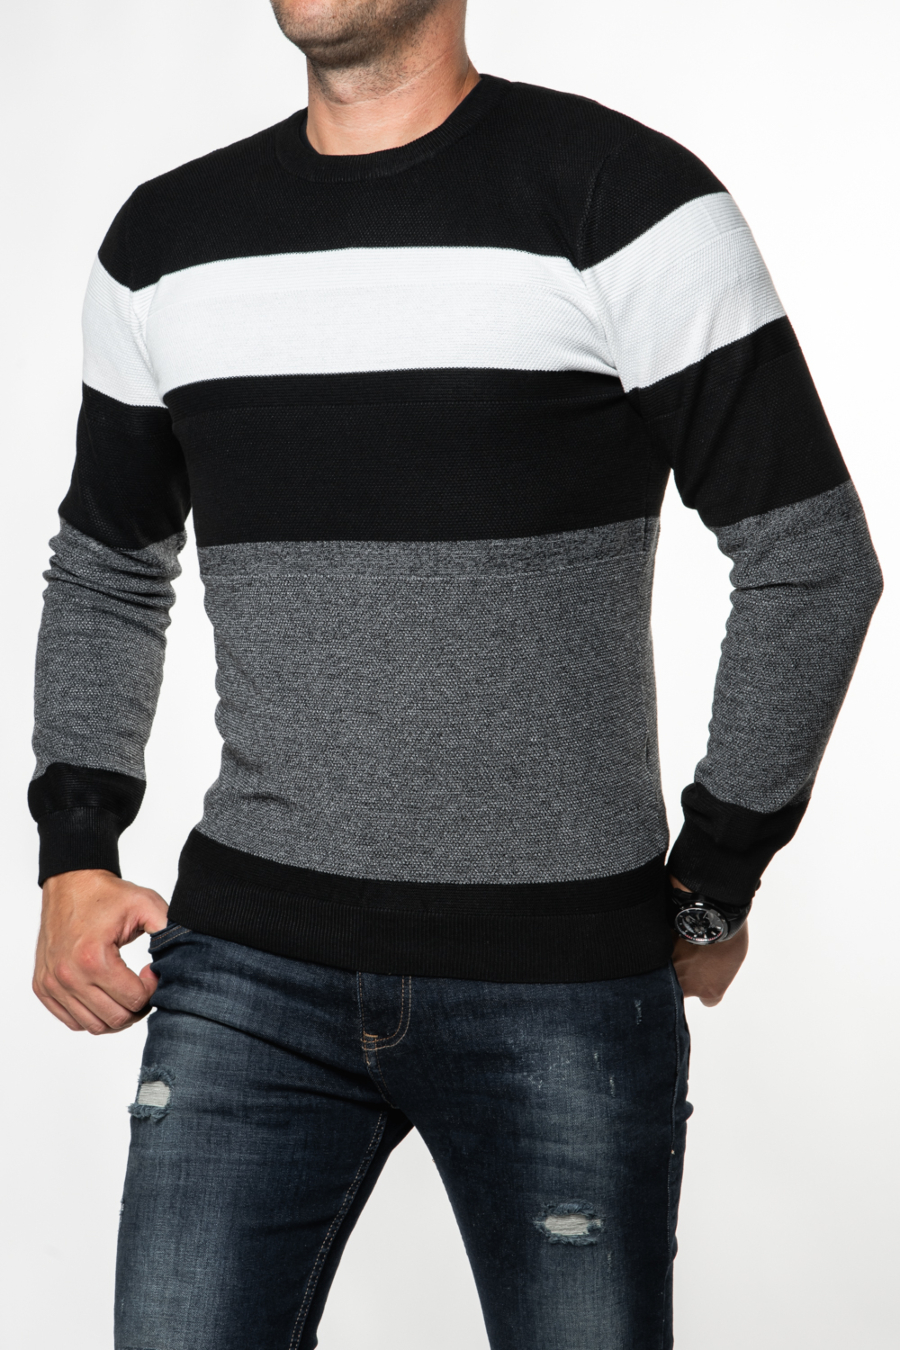 Moški pulover JH-3235, črn-bel